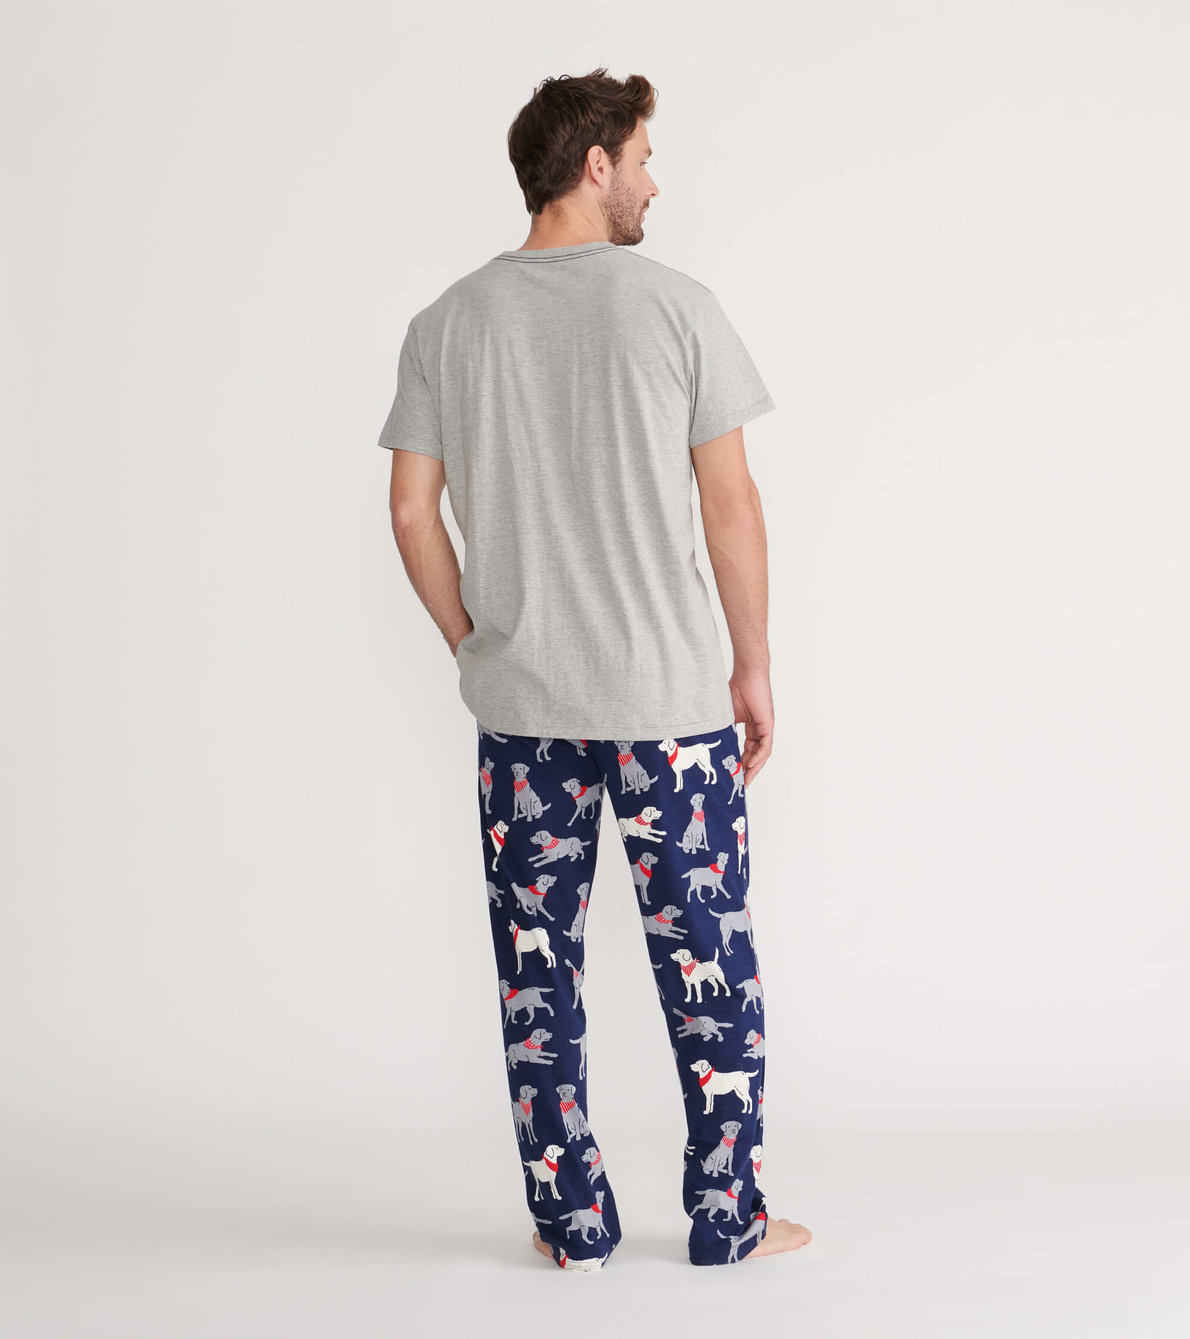 View larger image of Bandana Labs Men's Jersey Pajama Pants